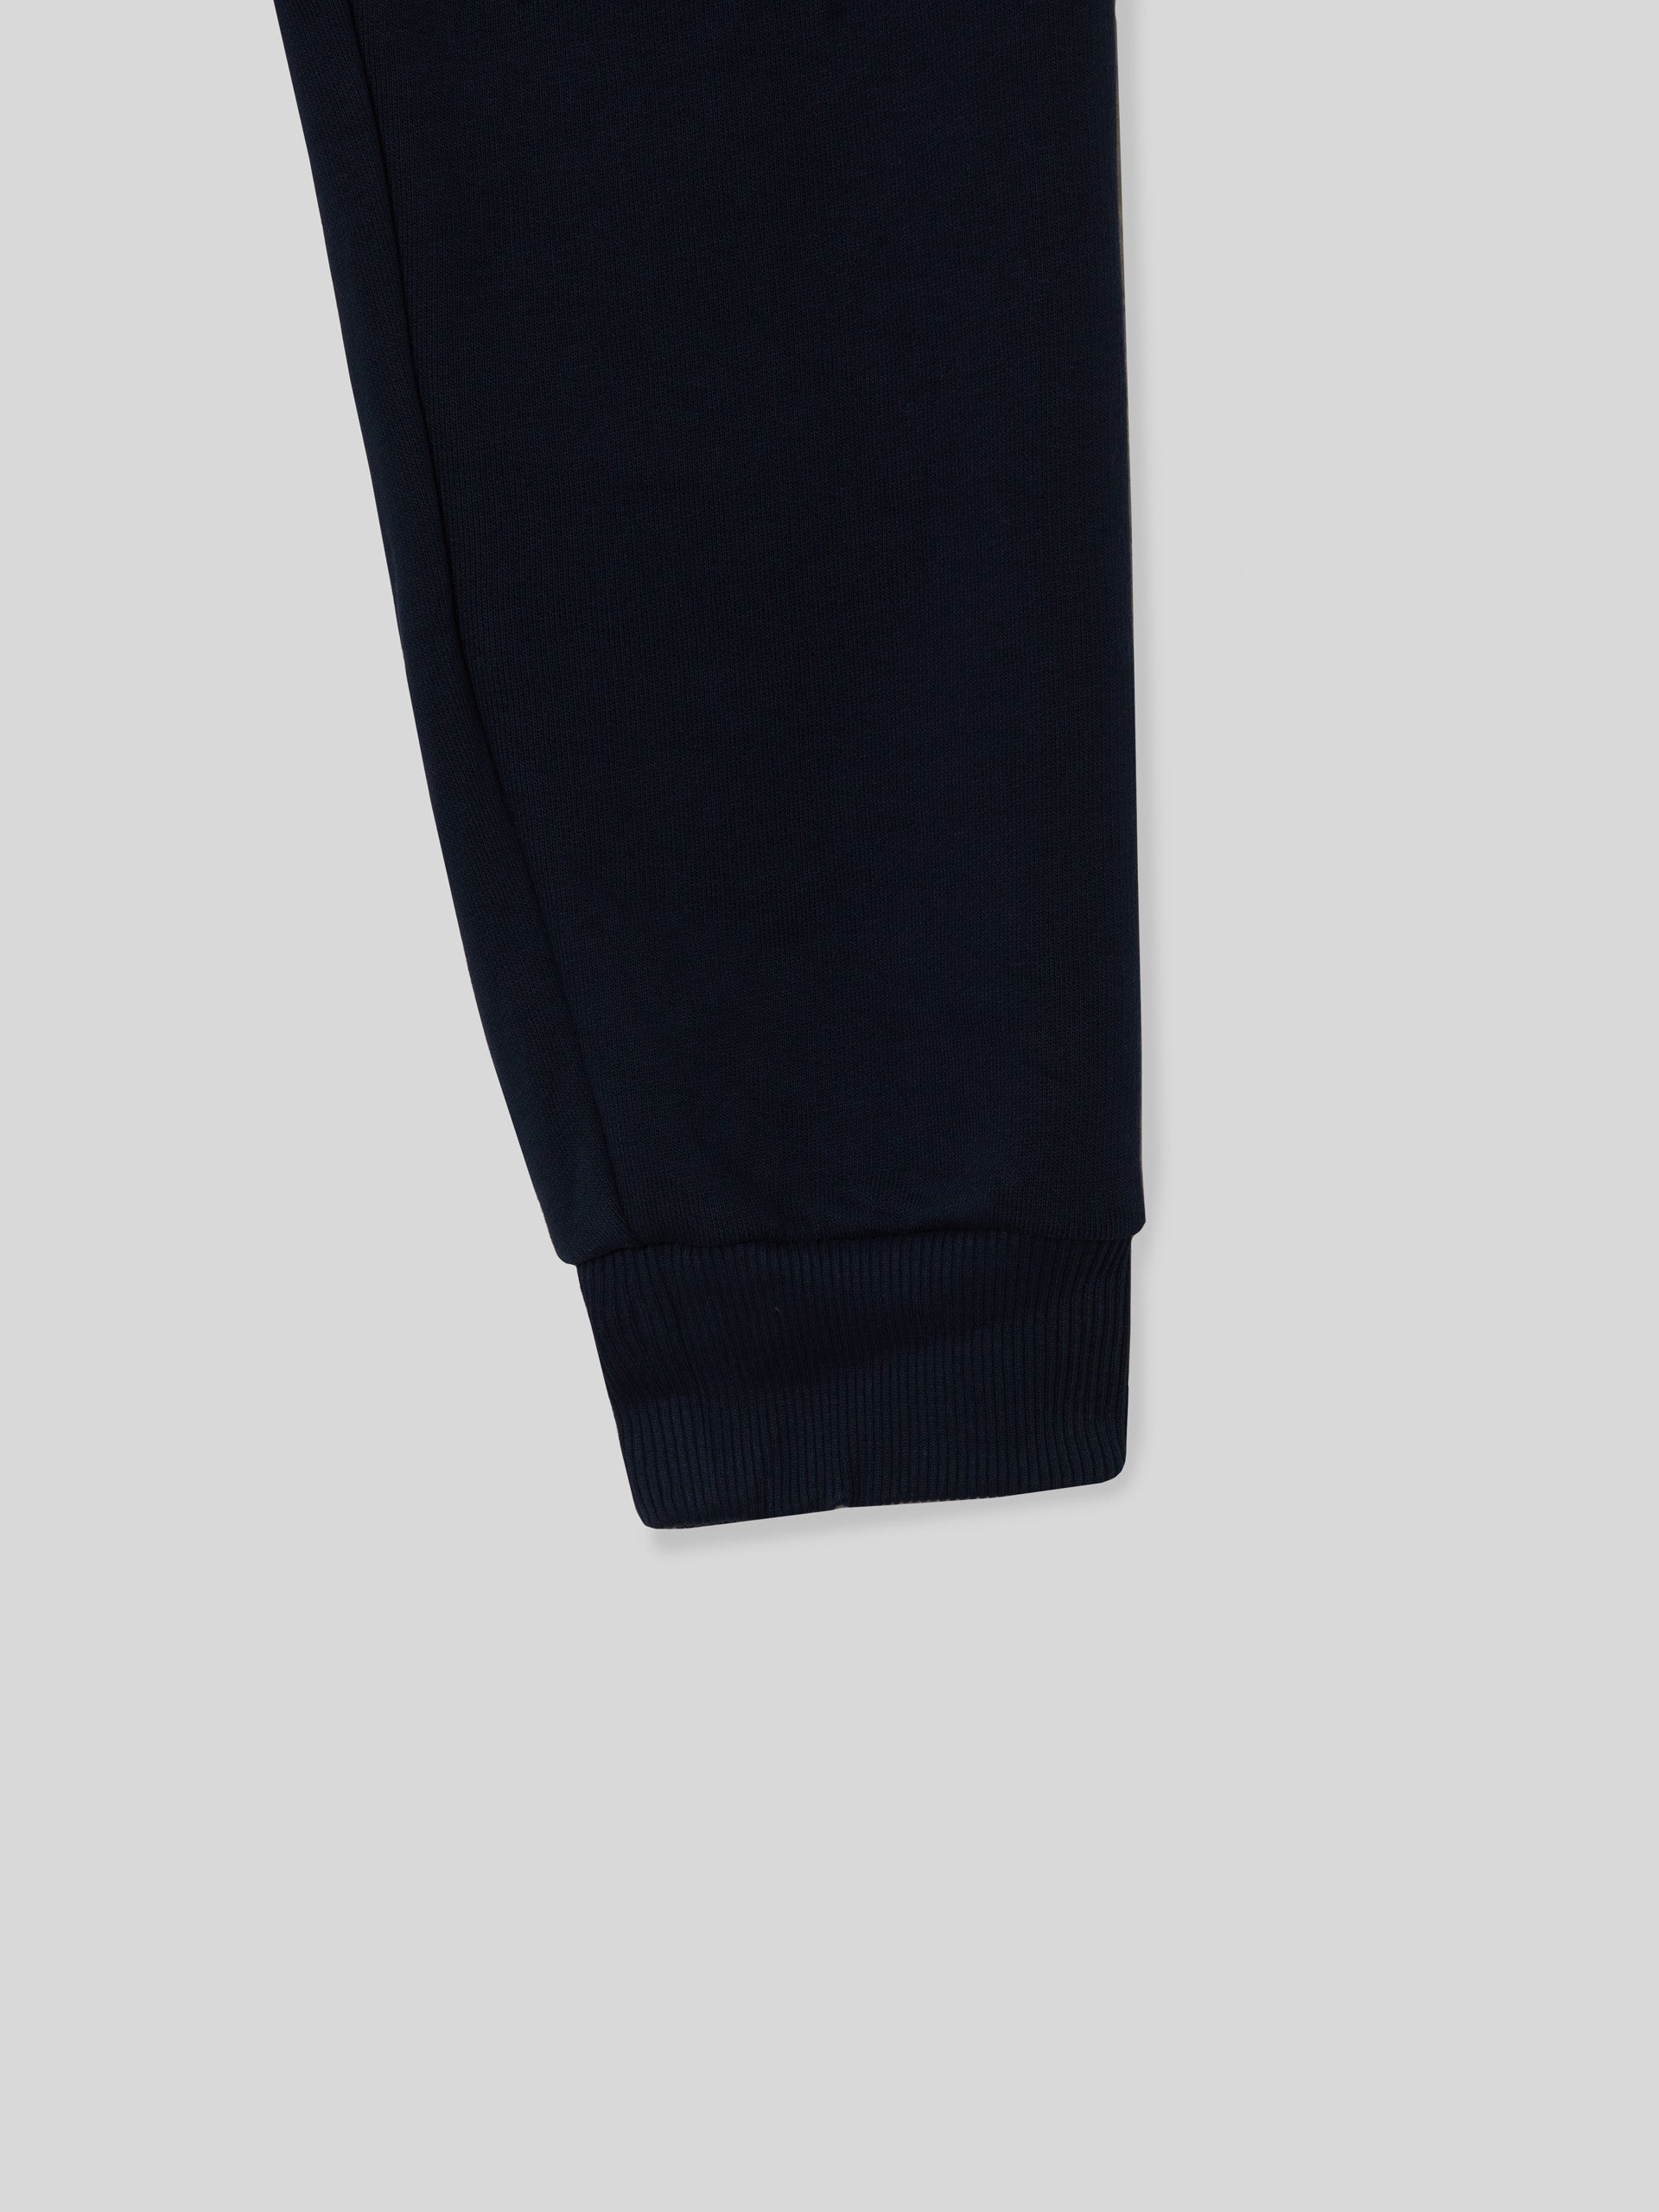 Pantalon deportivo clasico silbon azul marino